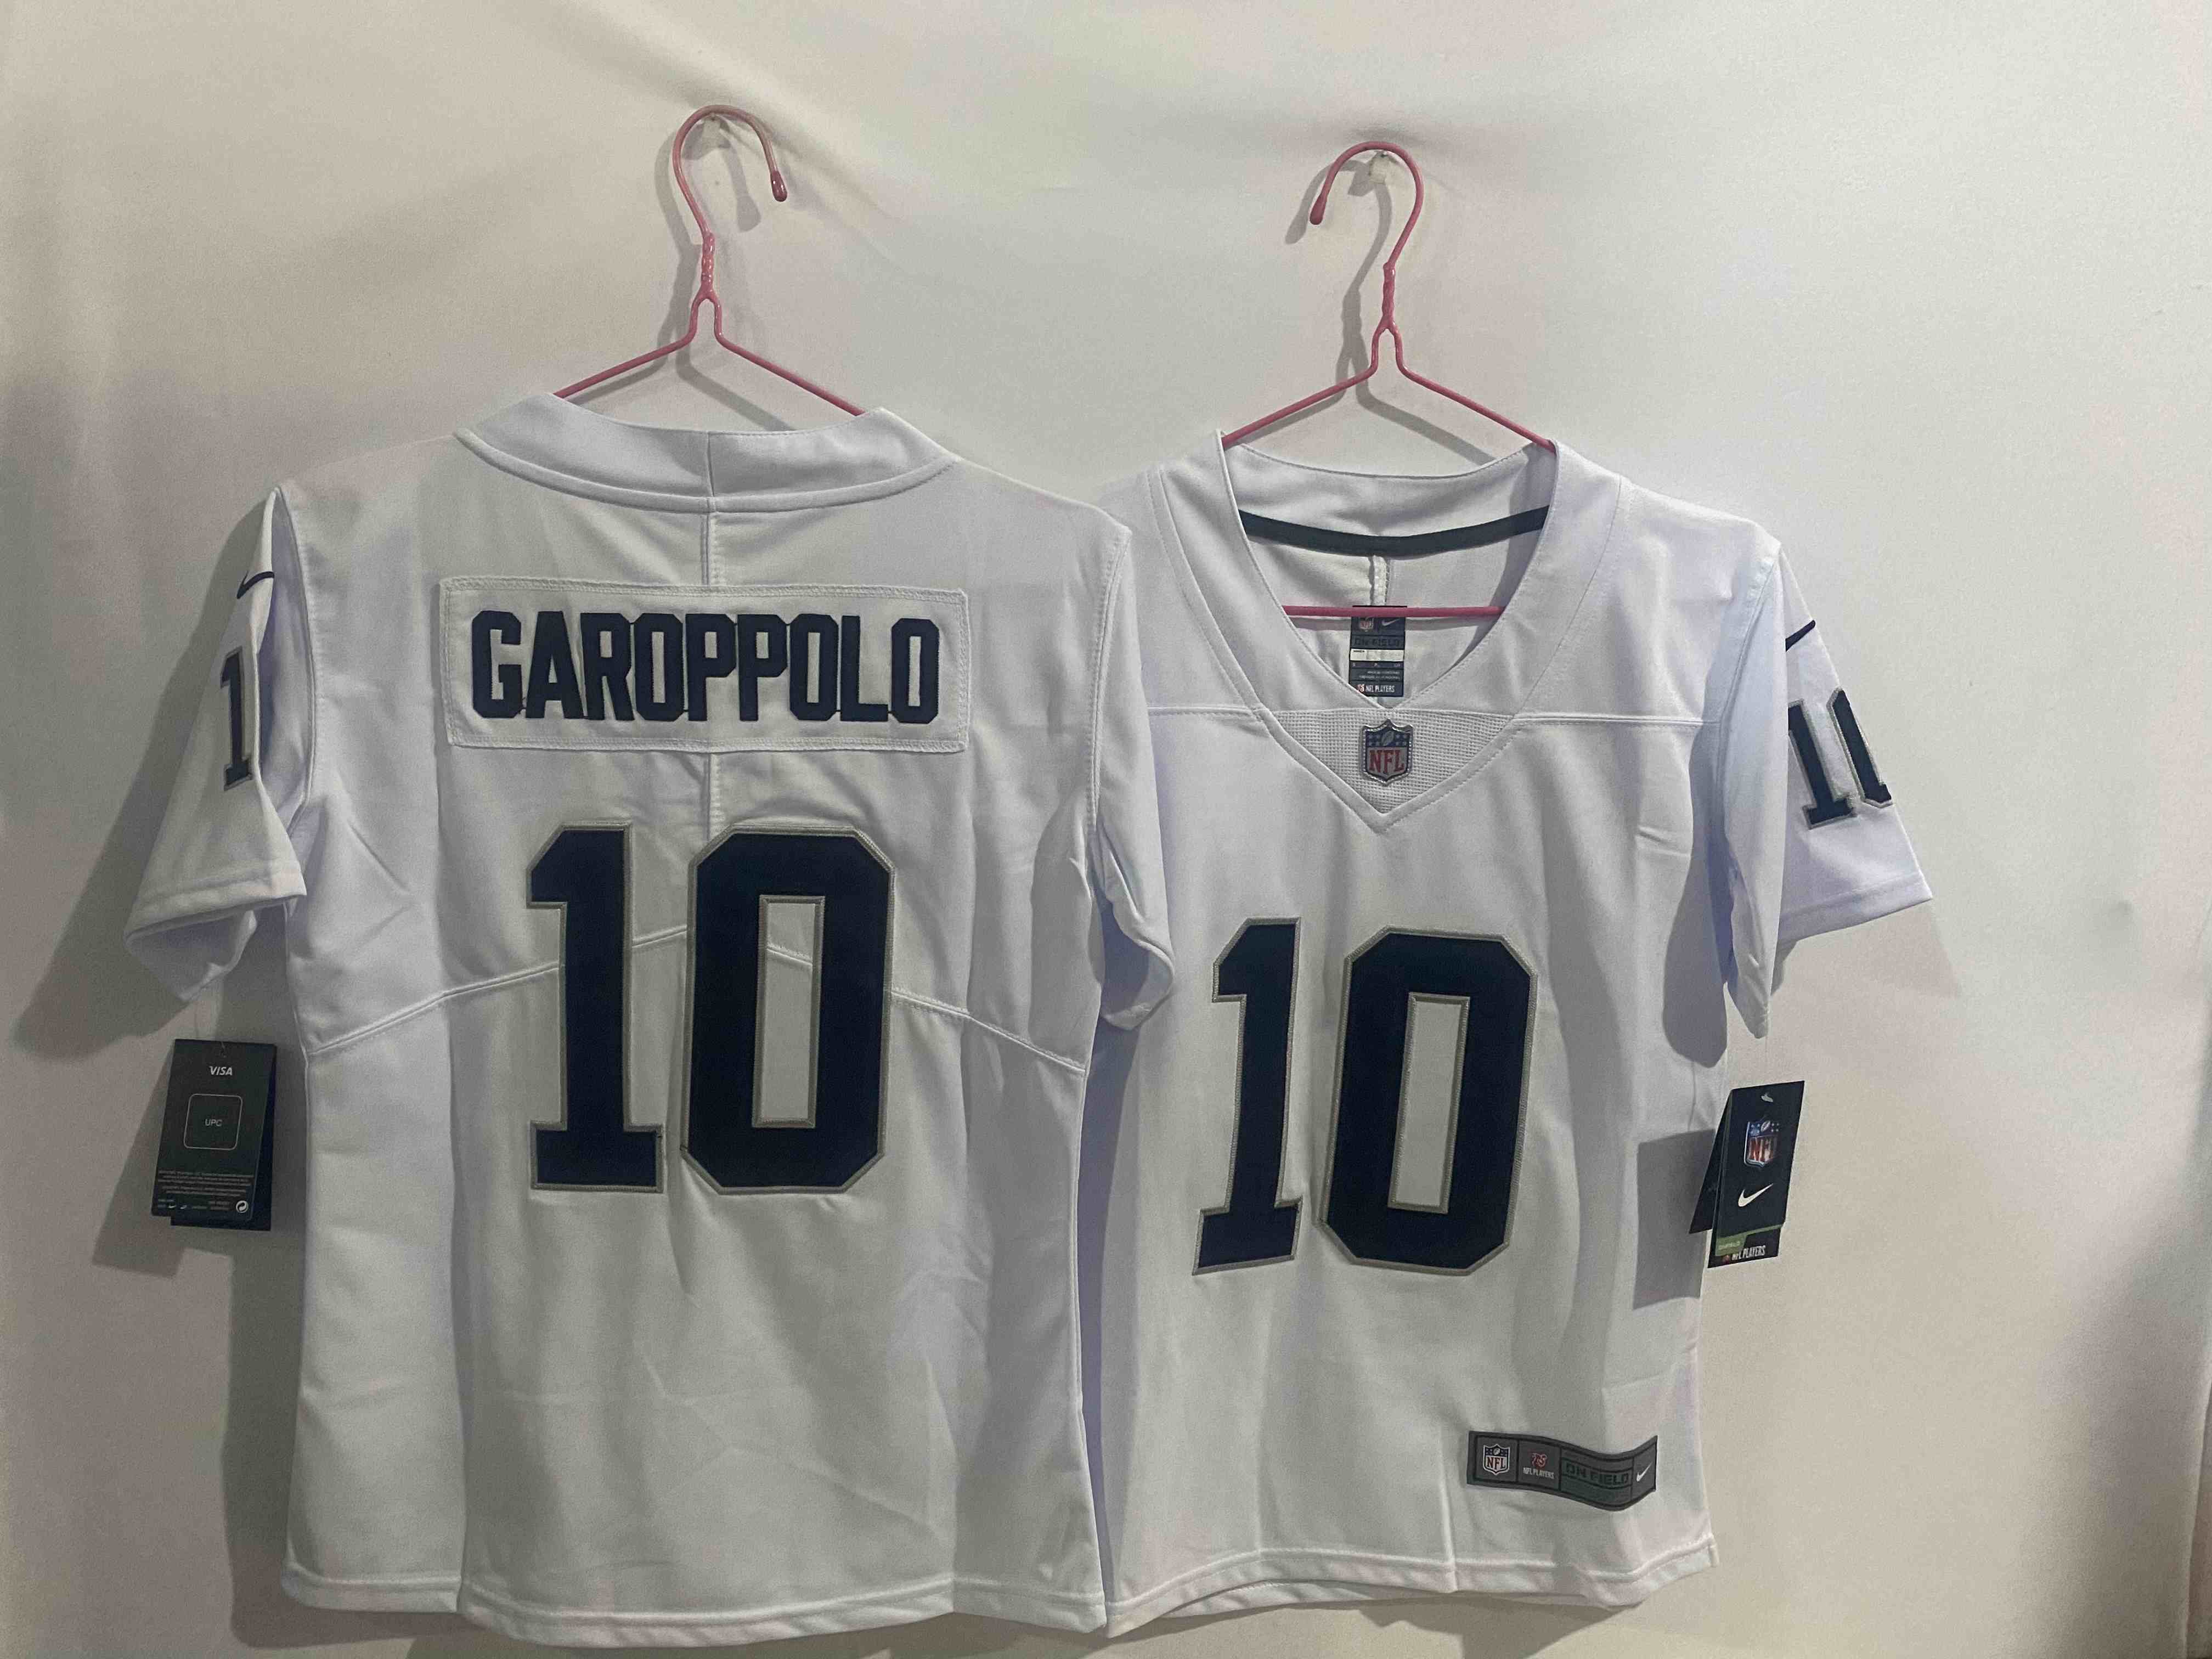 Youth Las Vegas Raiders #10 Jimmy Garoppolo White Vapor Untouchable Limited Stitched Football Jersey